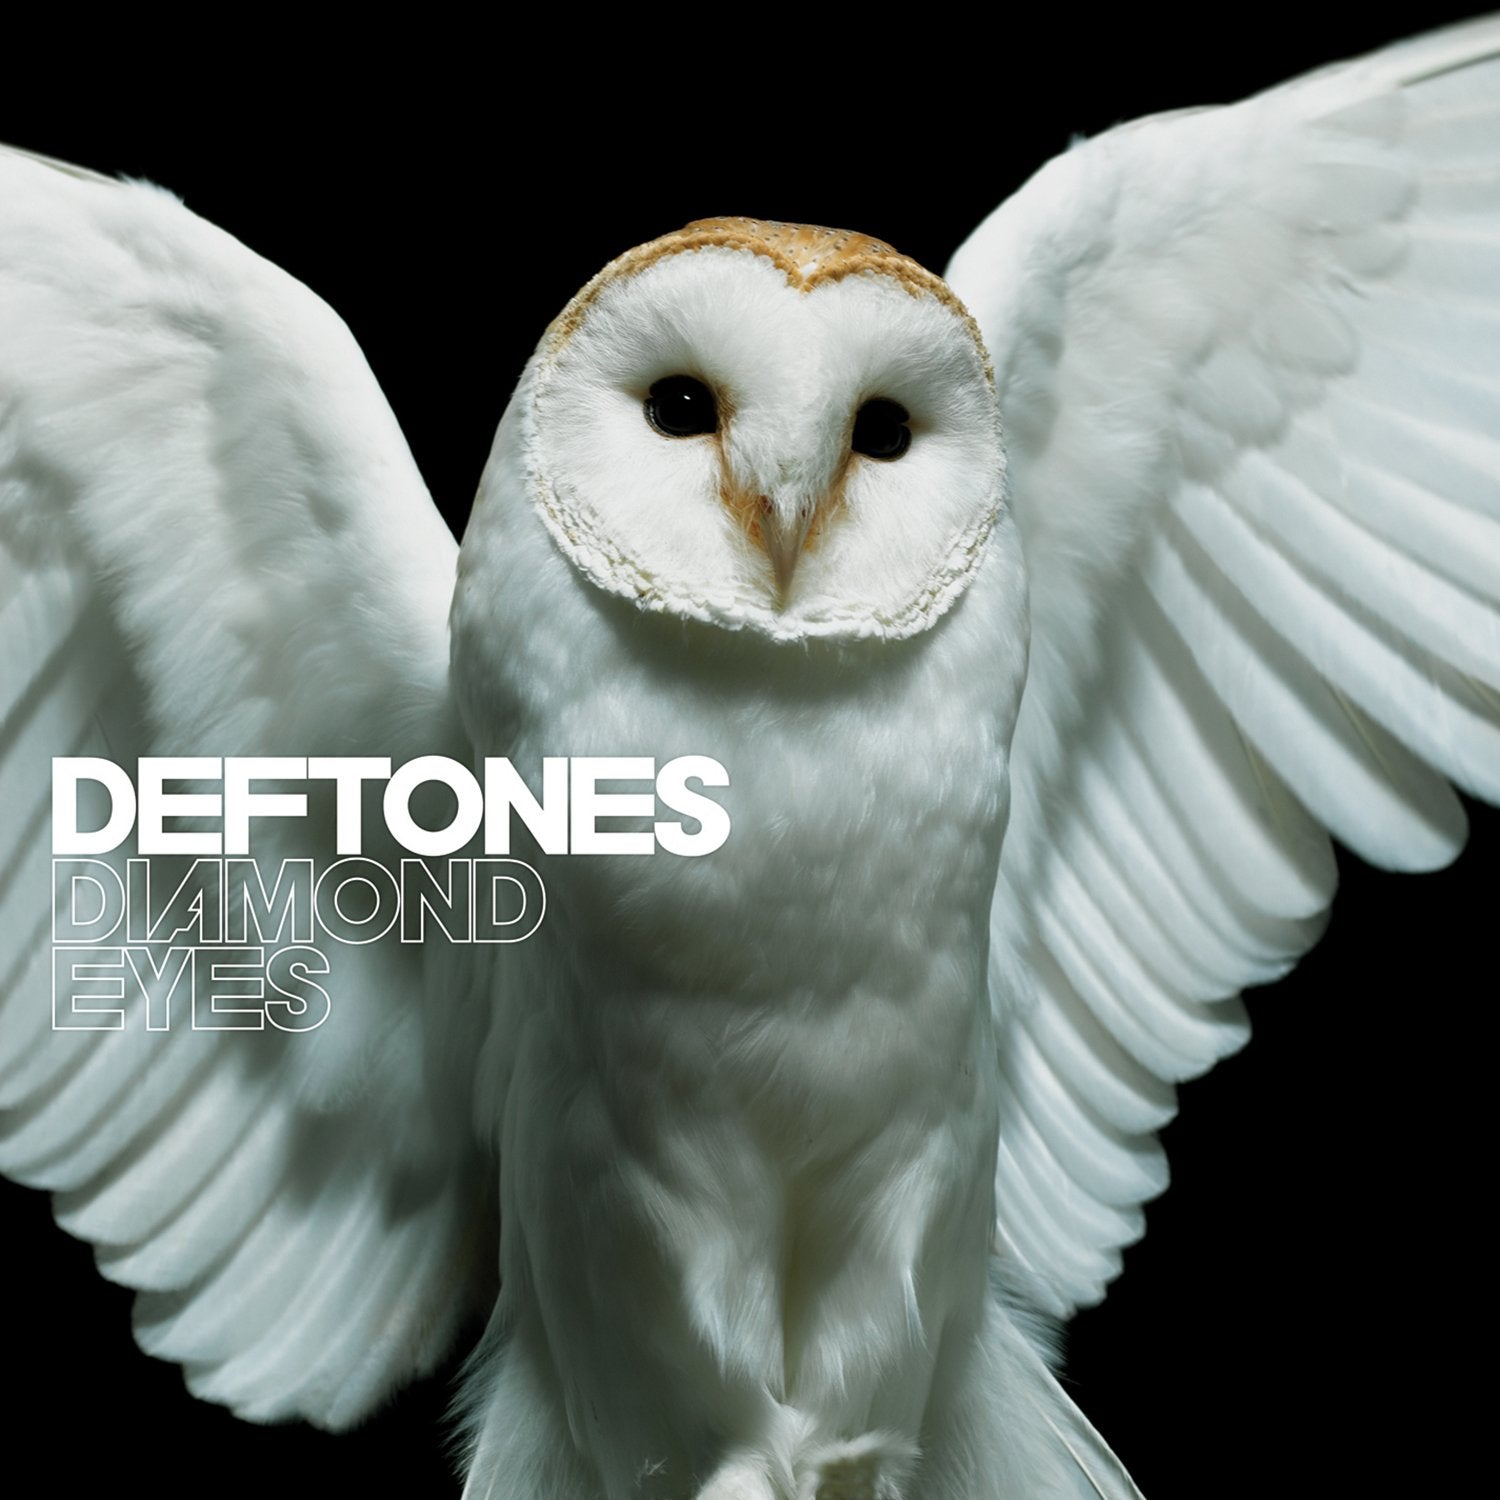 Deftones "Diamond Eyes"